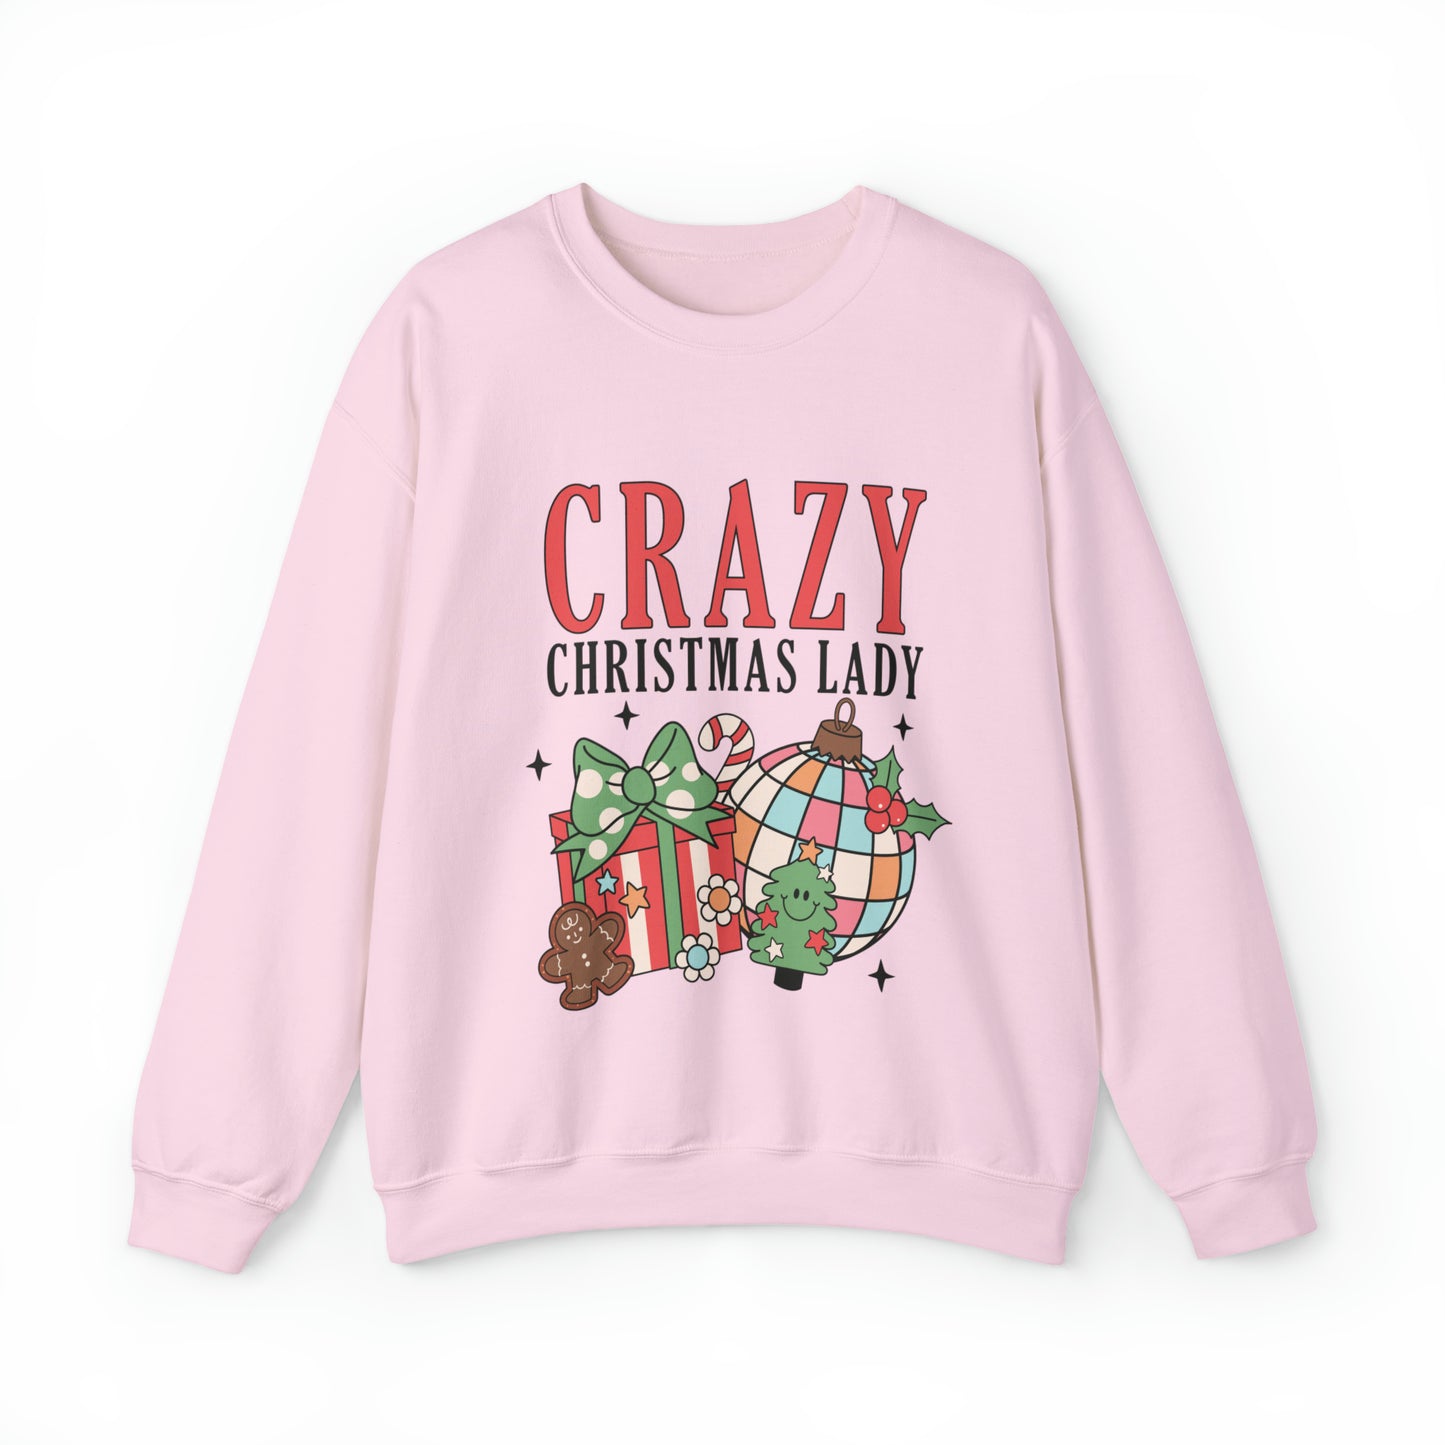 Crazy Christmas Lady Women's Crewneck Sweatshirt